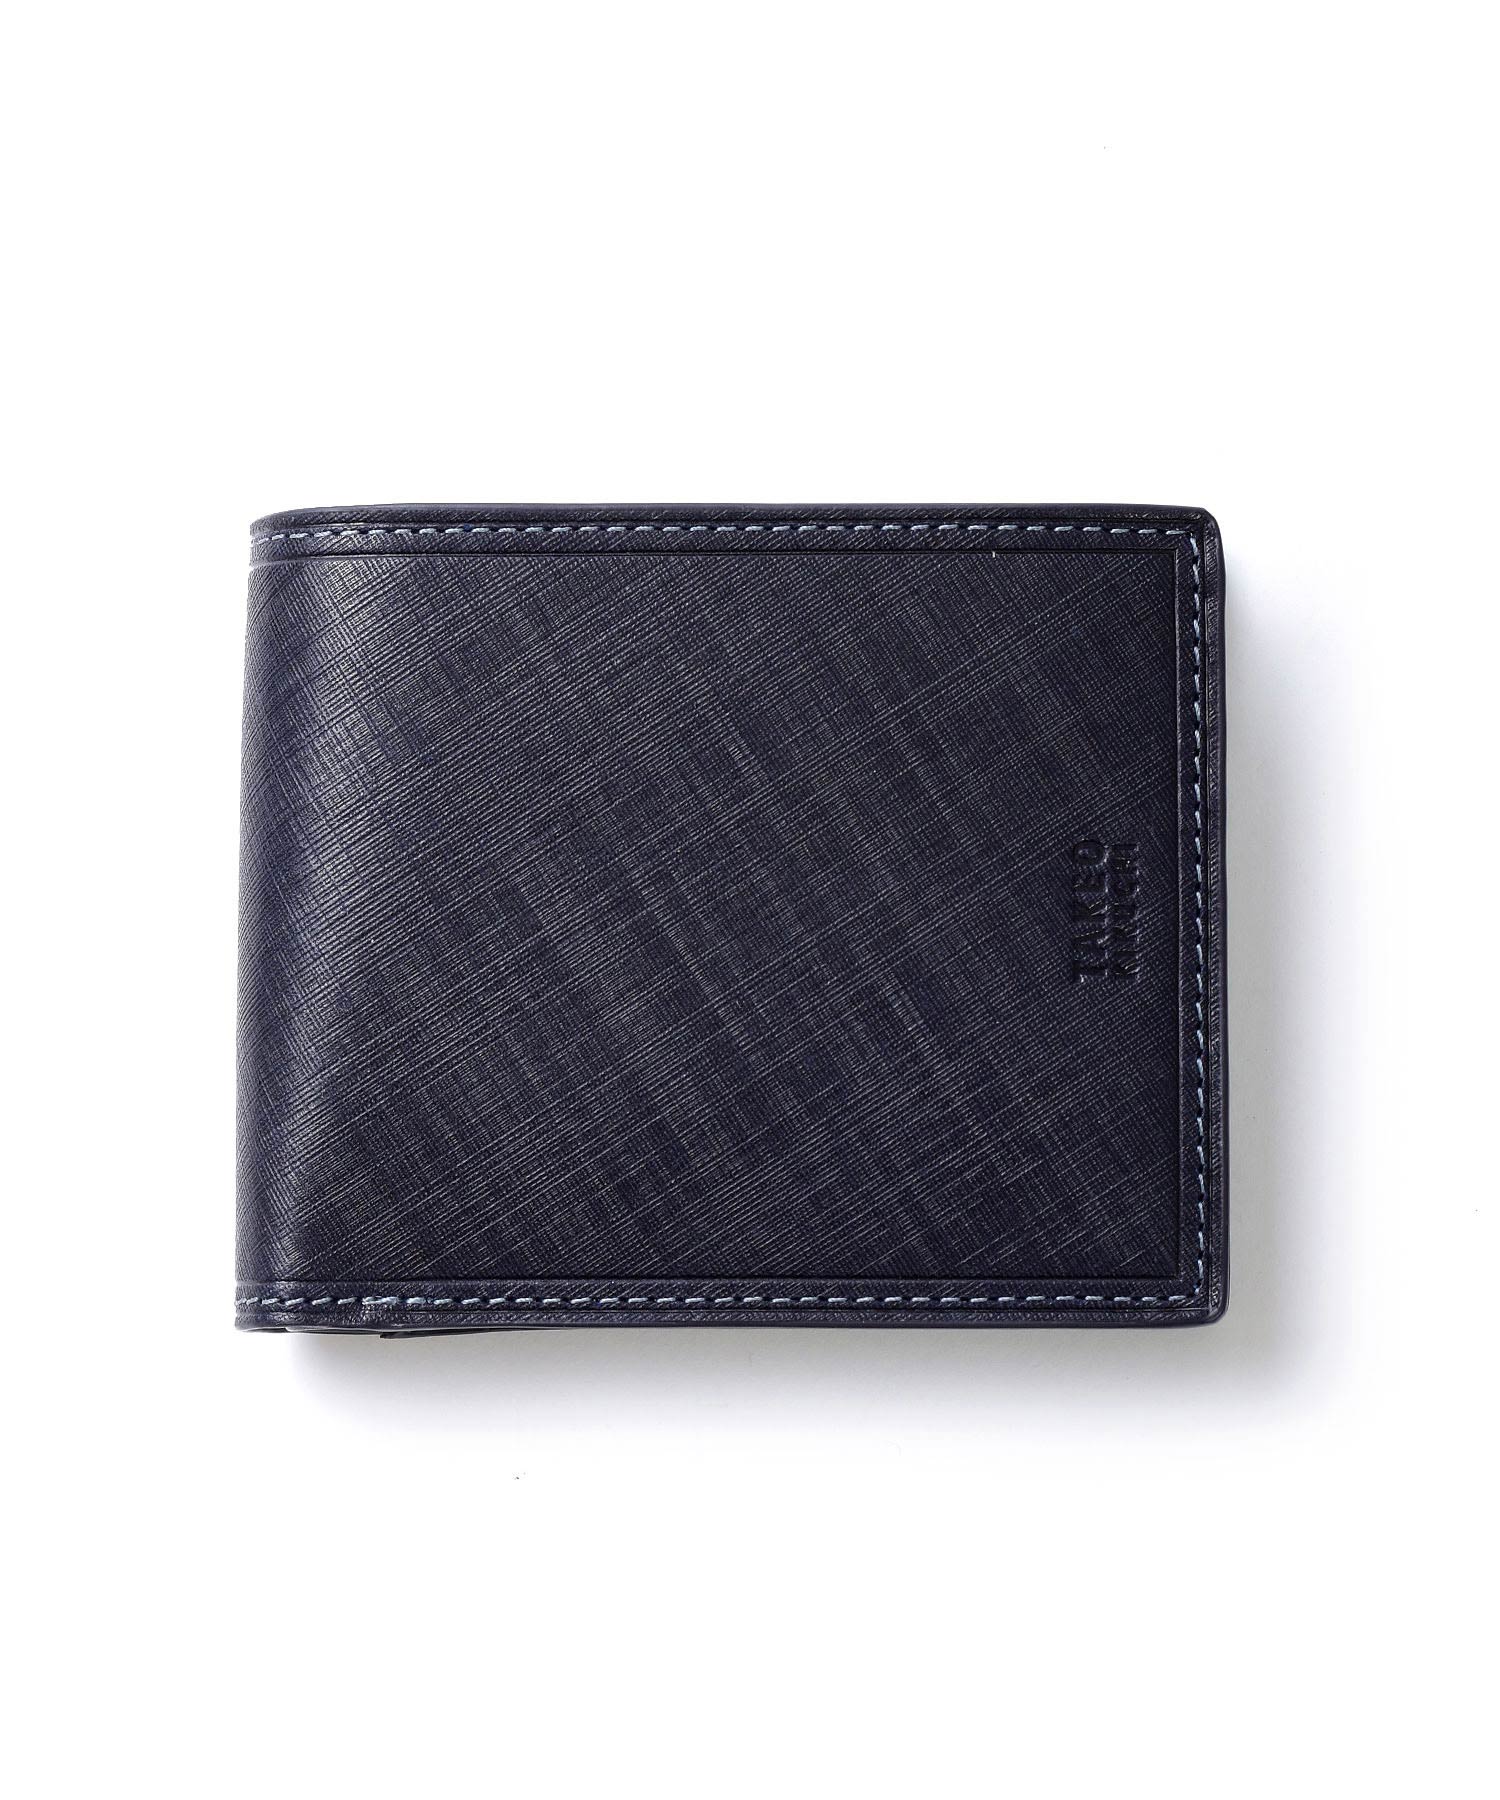 TAKEO KIKUCHI(タケオキクチ)タケオキクチ シグマ 二つ折り財布 カード段4 No.727626を販売。ギフト包装無料、平日15時